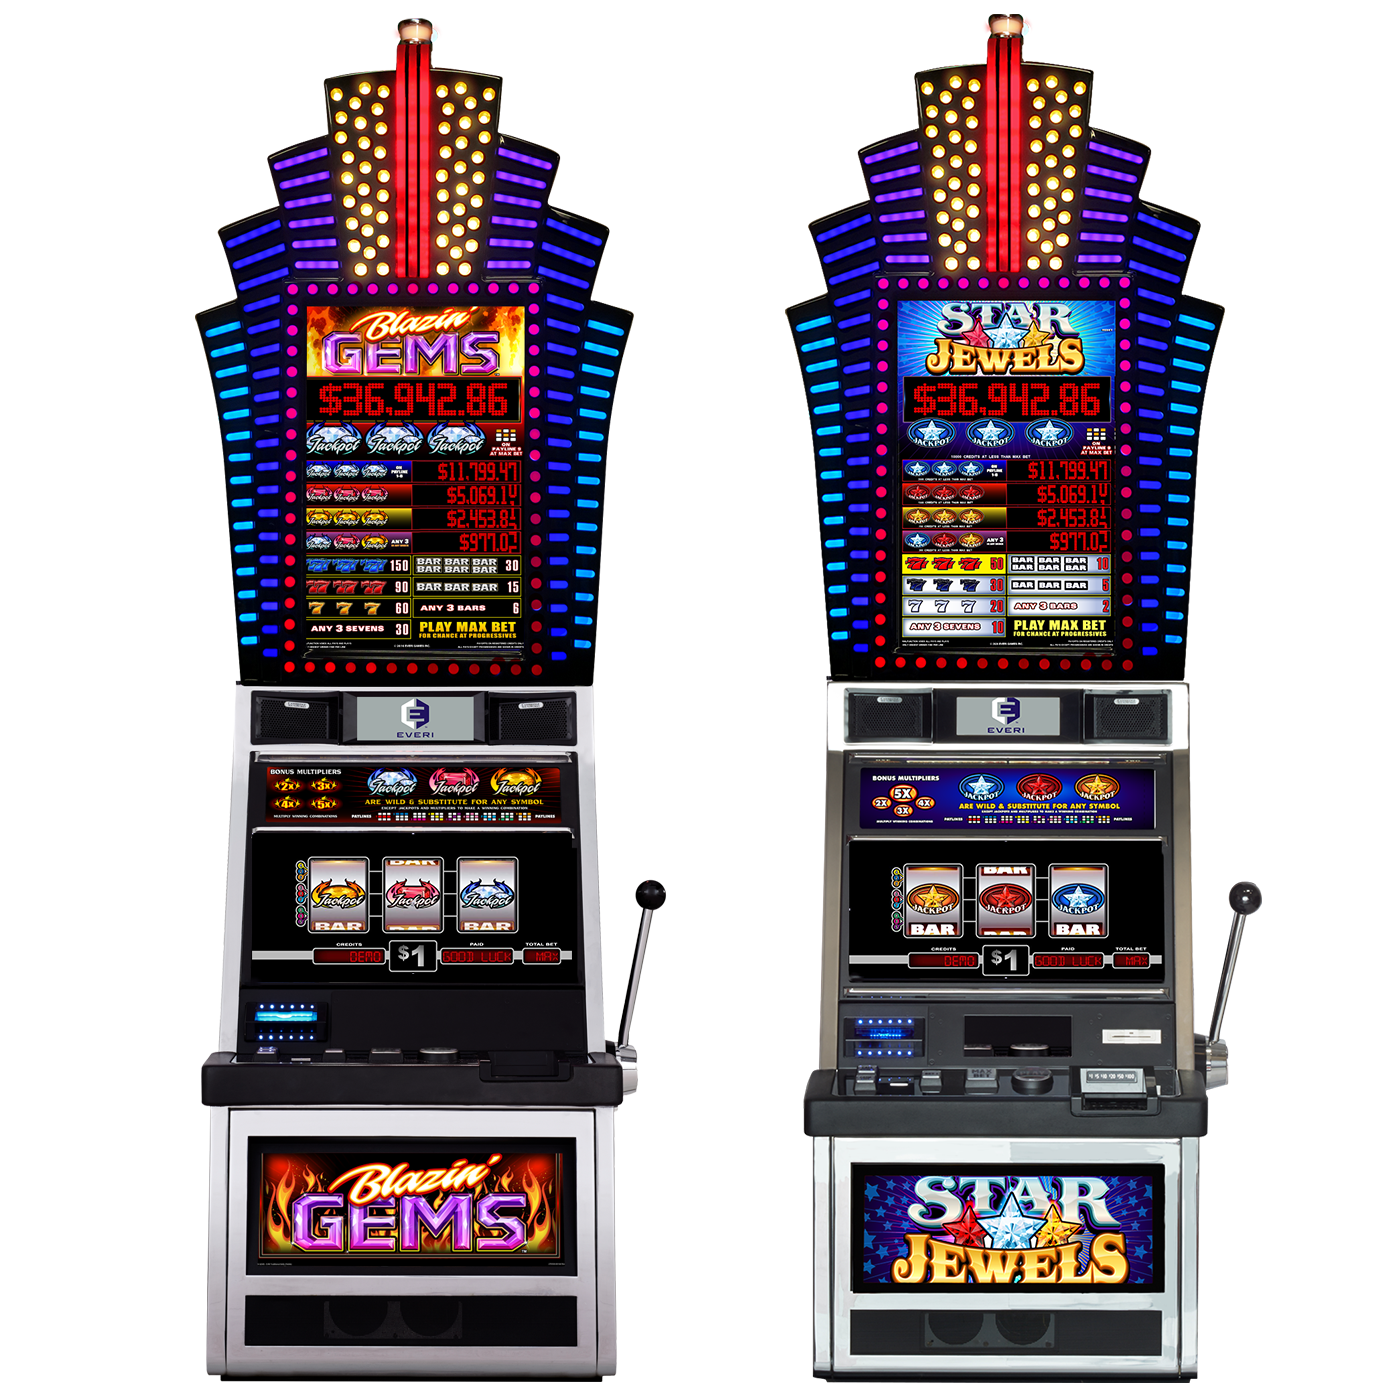 Slot Fortune Gems-TaDa Games